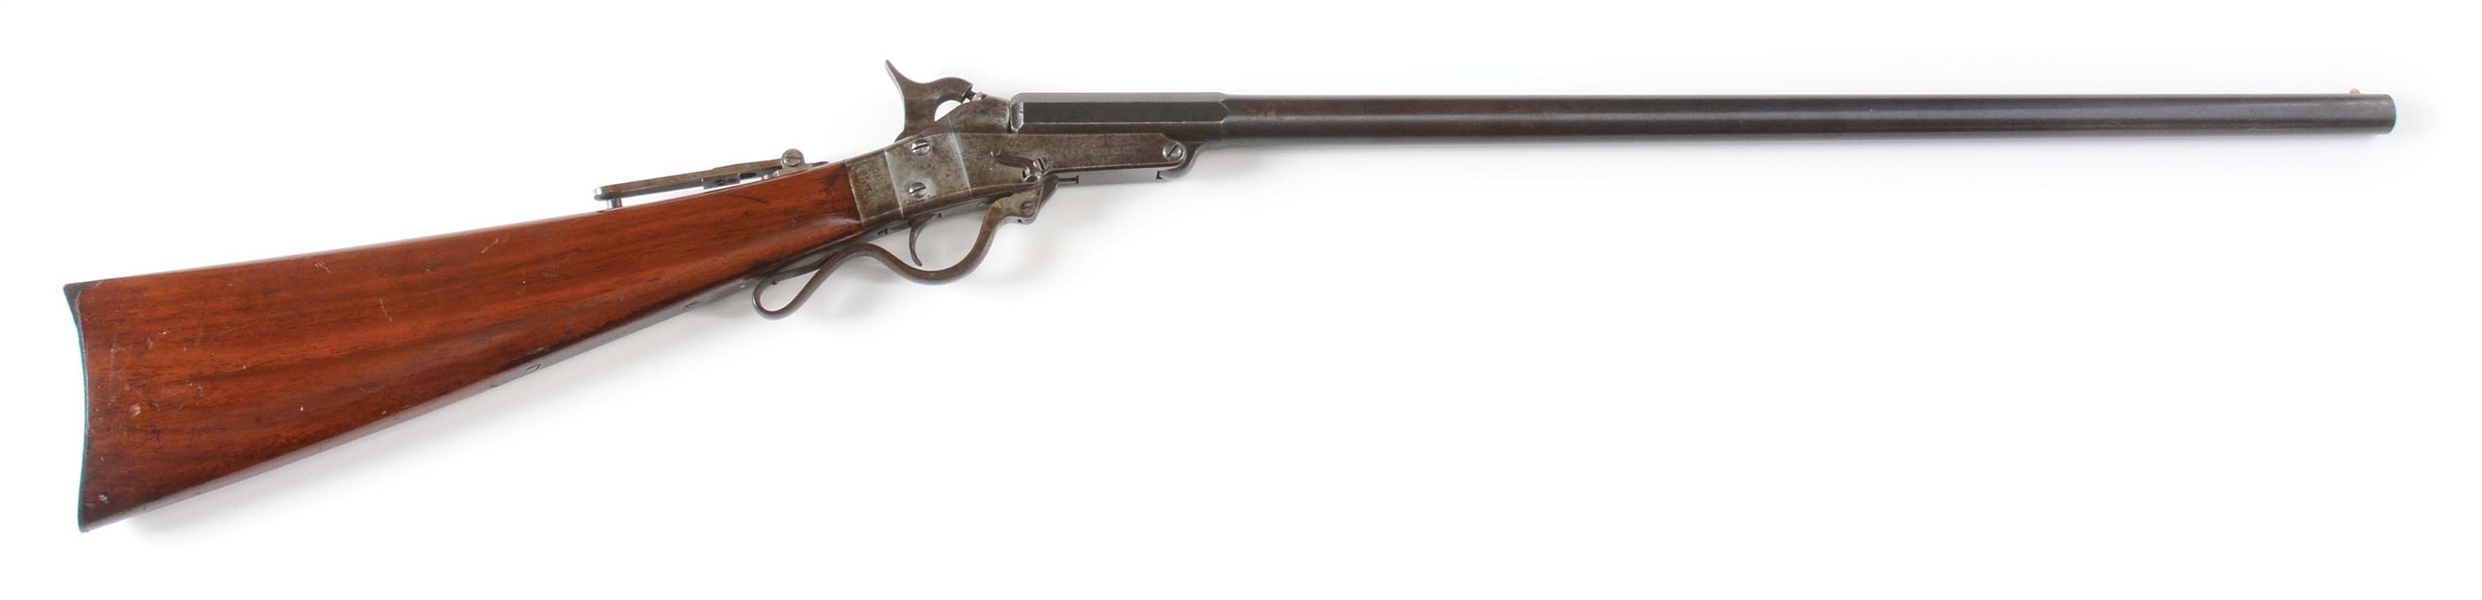 (A) MAYNARD MASSACHUSETTS ARMS 1859 PERCUSSION SINGLE BARREL SHOTGUN.